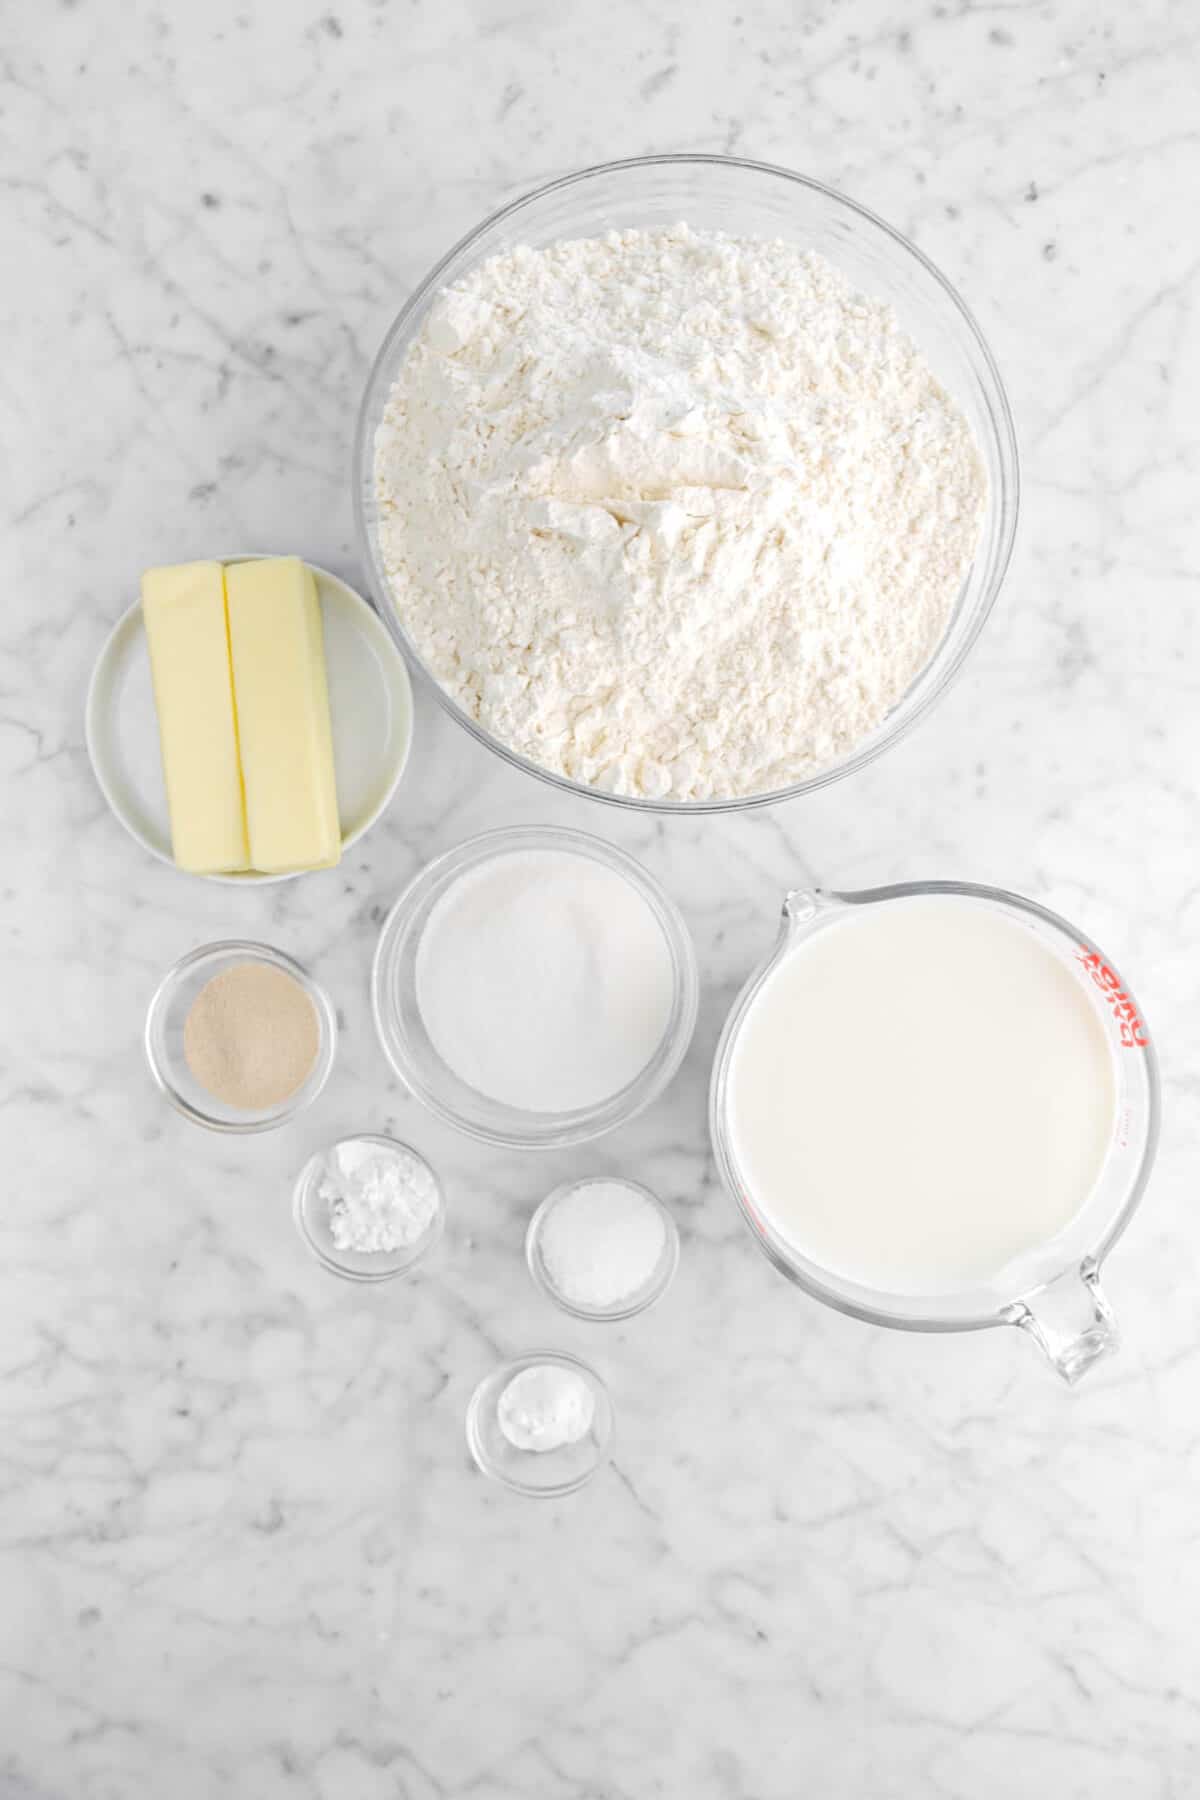 flour, butter, sugar, yeast, milk, salt, baking powder, and baking soda on marble counter